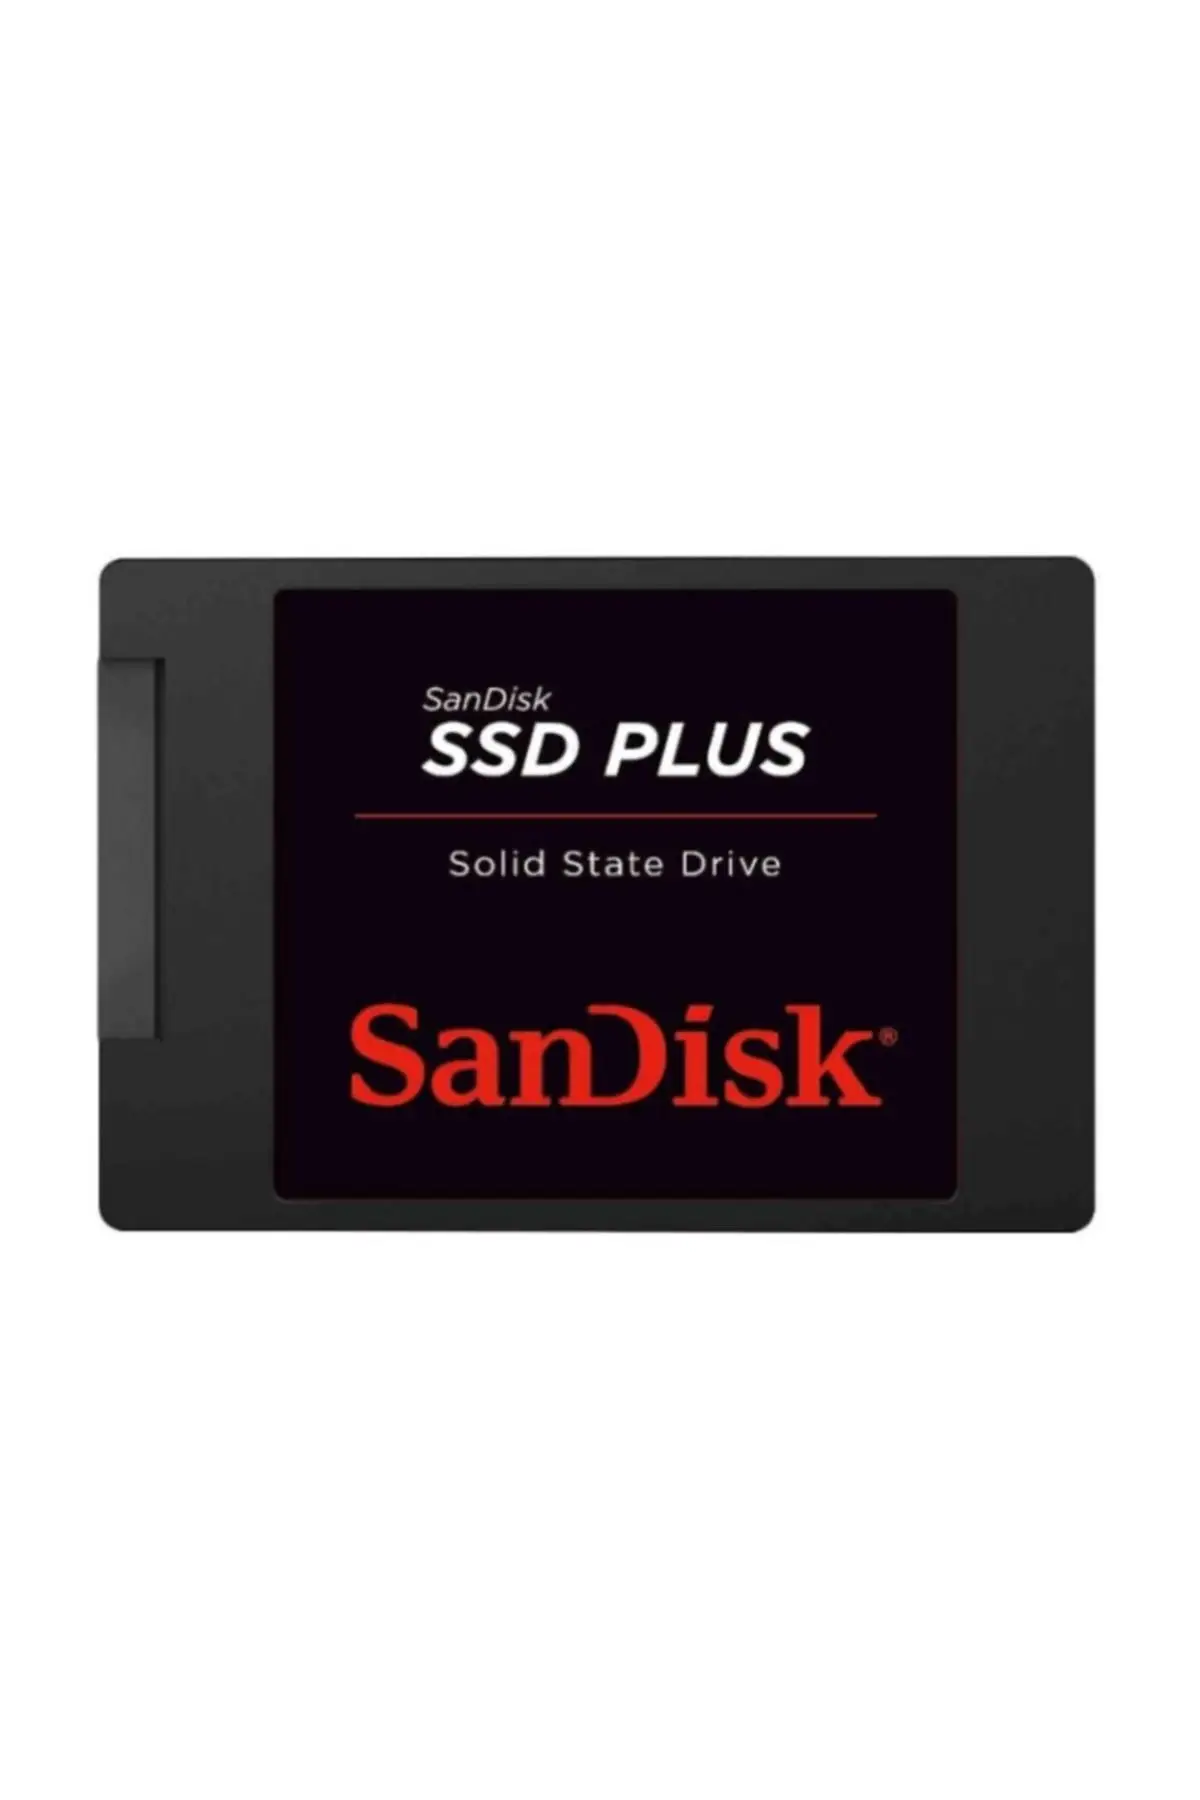 

SSD plus 240gb 530mb-440 mb/s sata 3 2.5 "ssd sdssda-240g-g26, 500 - 599 mb/s write speed 250 - 449 mb/s